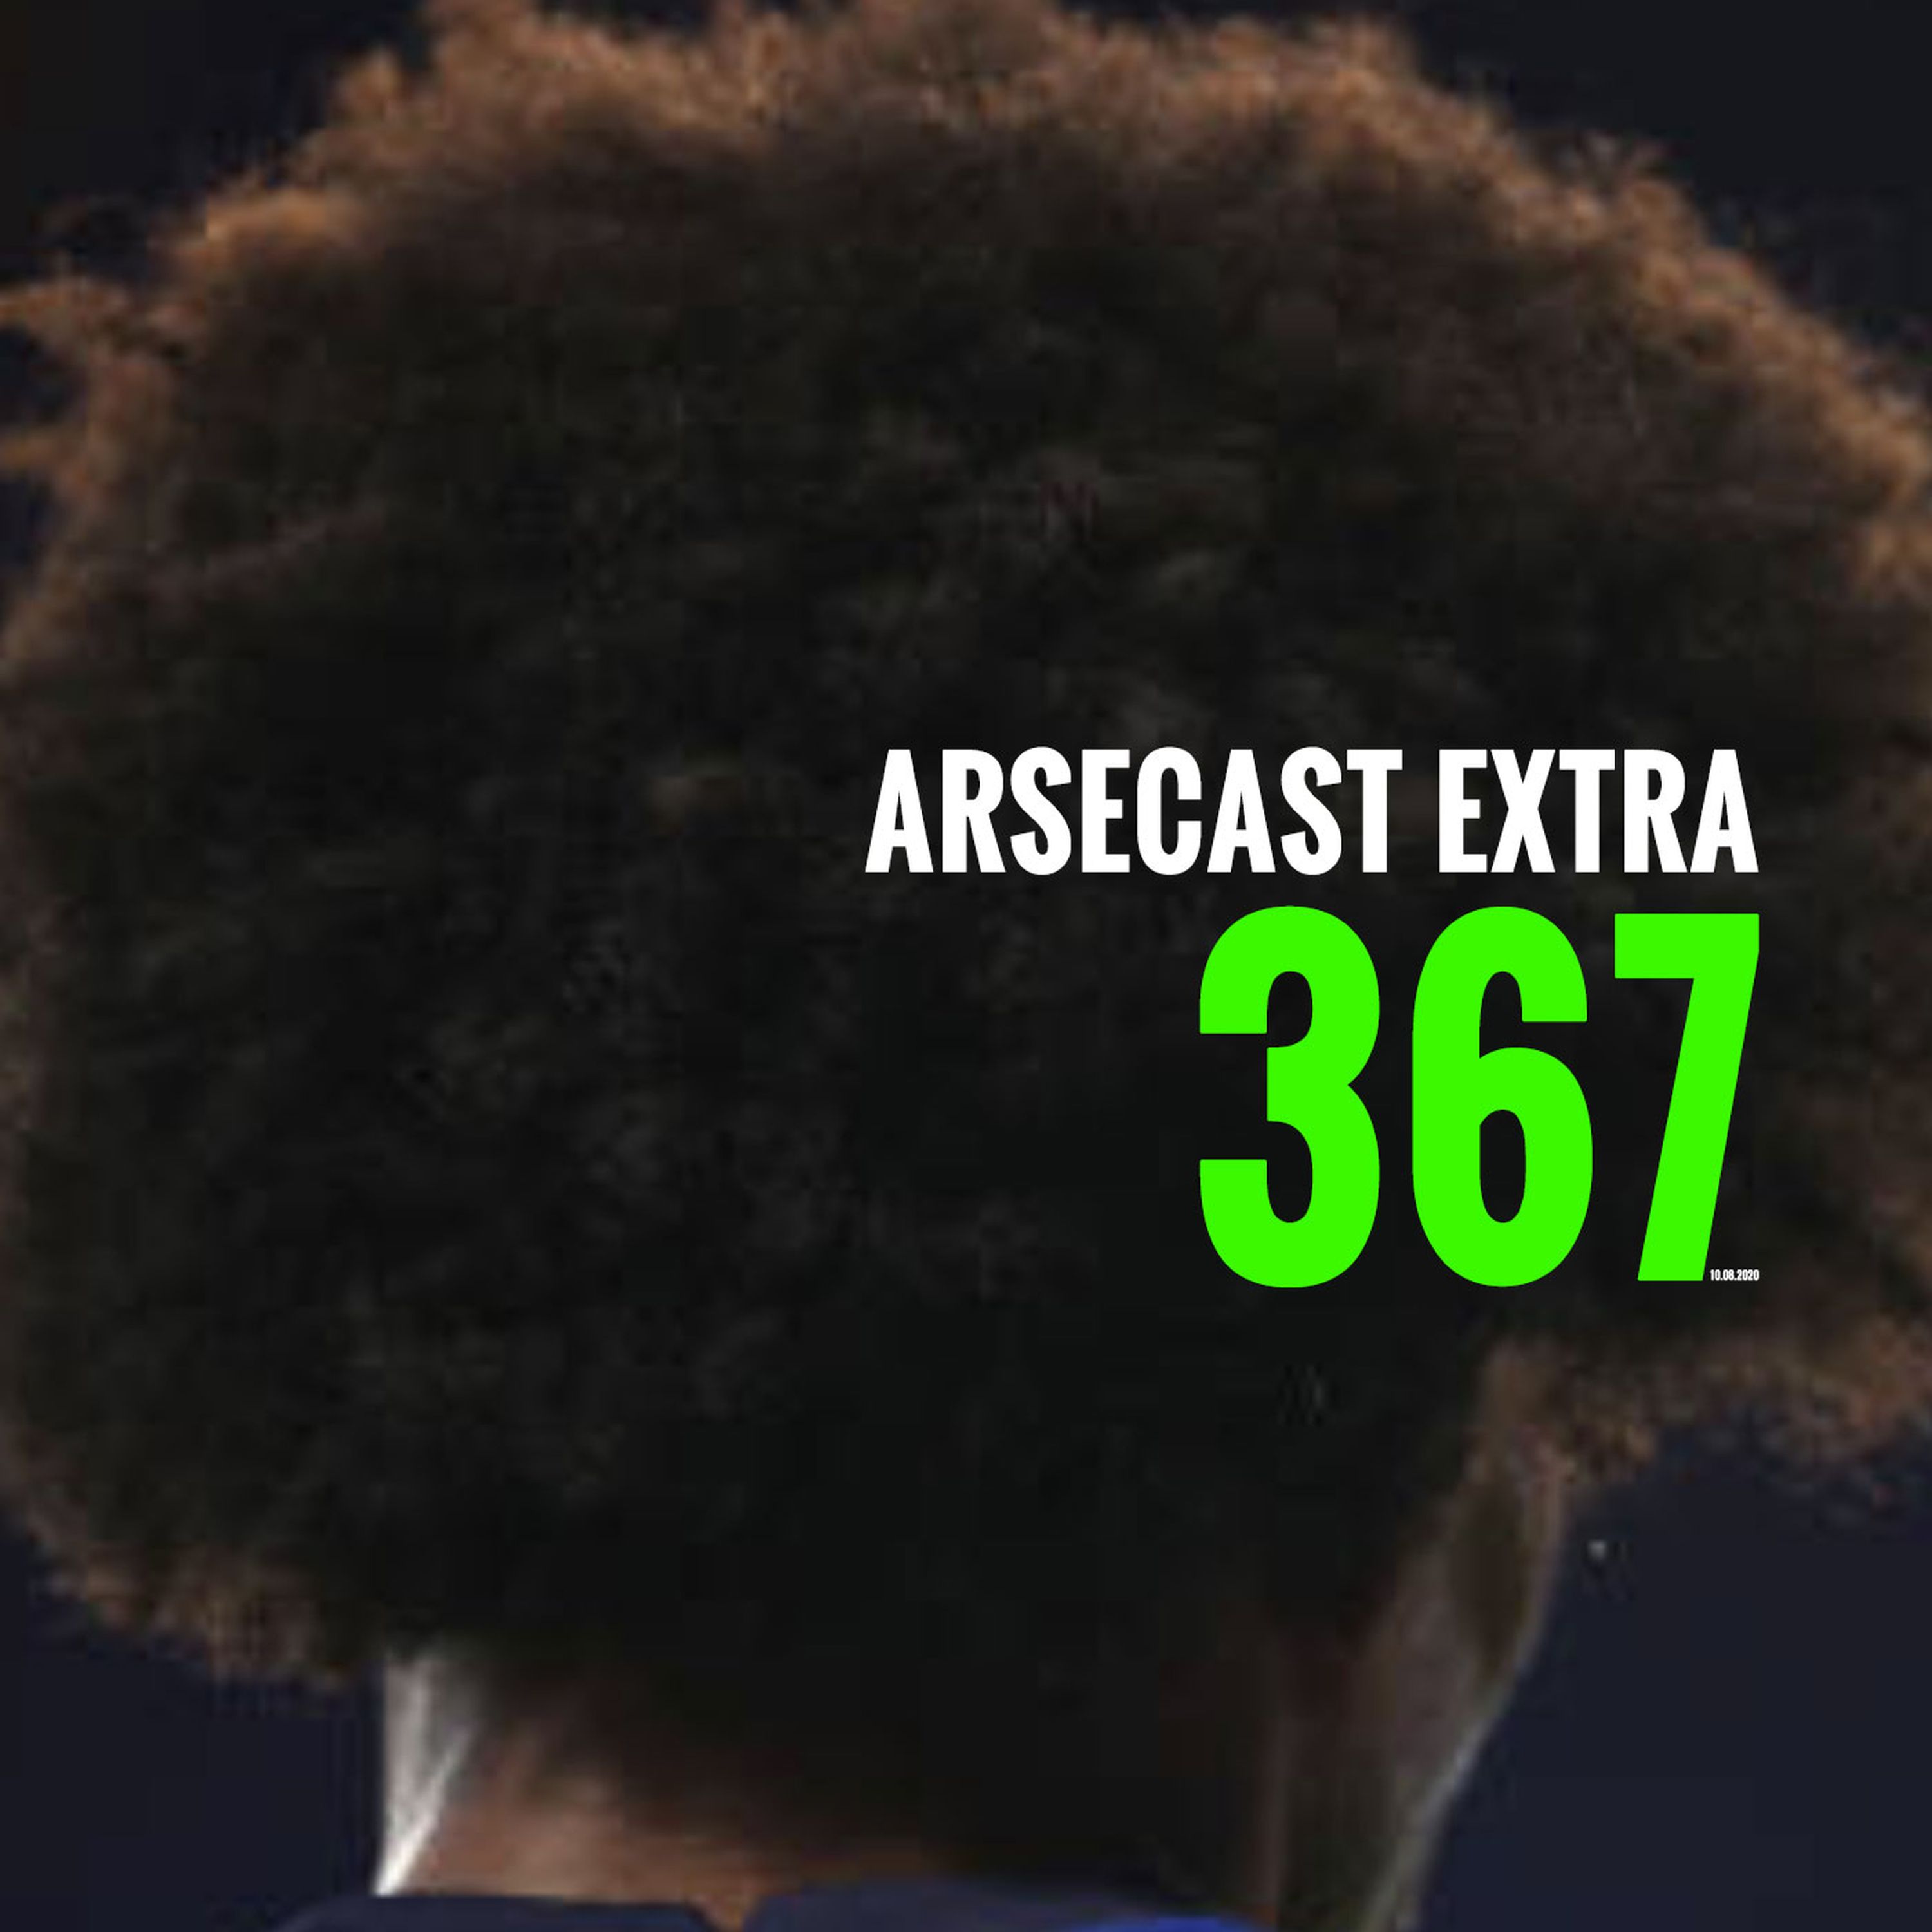 Arsecast Extra Episode 367  - 10.08.2020